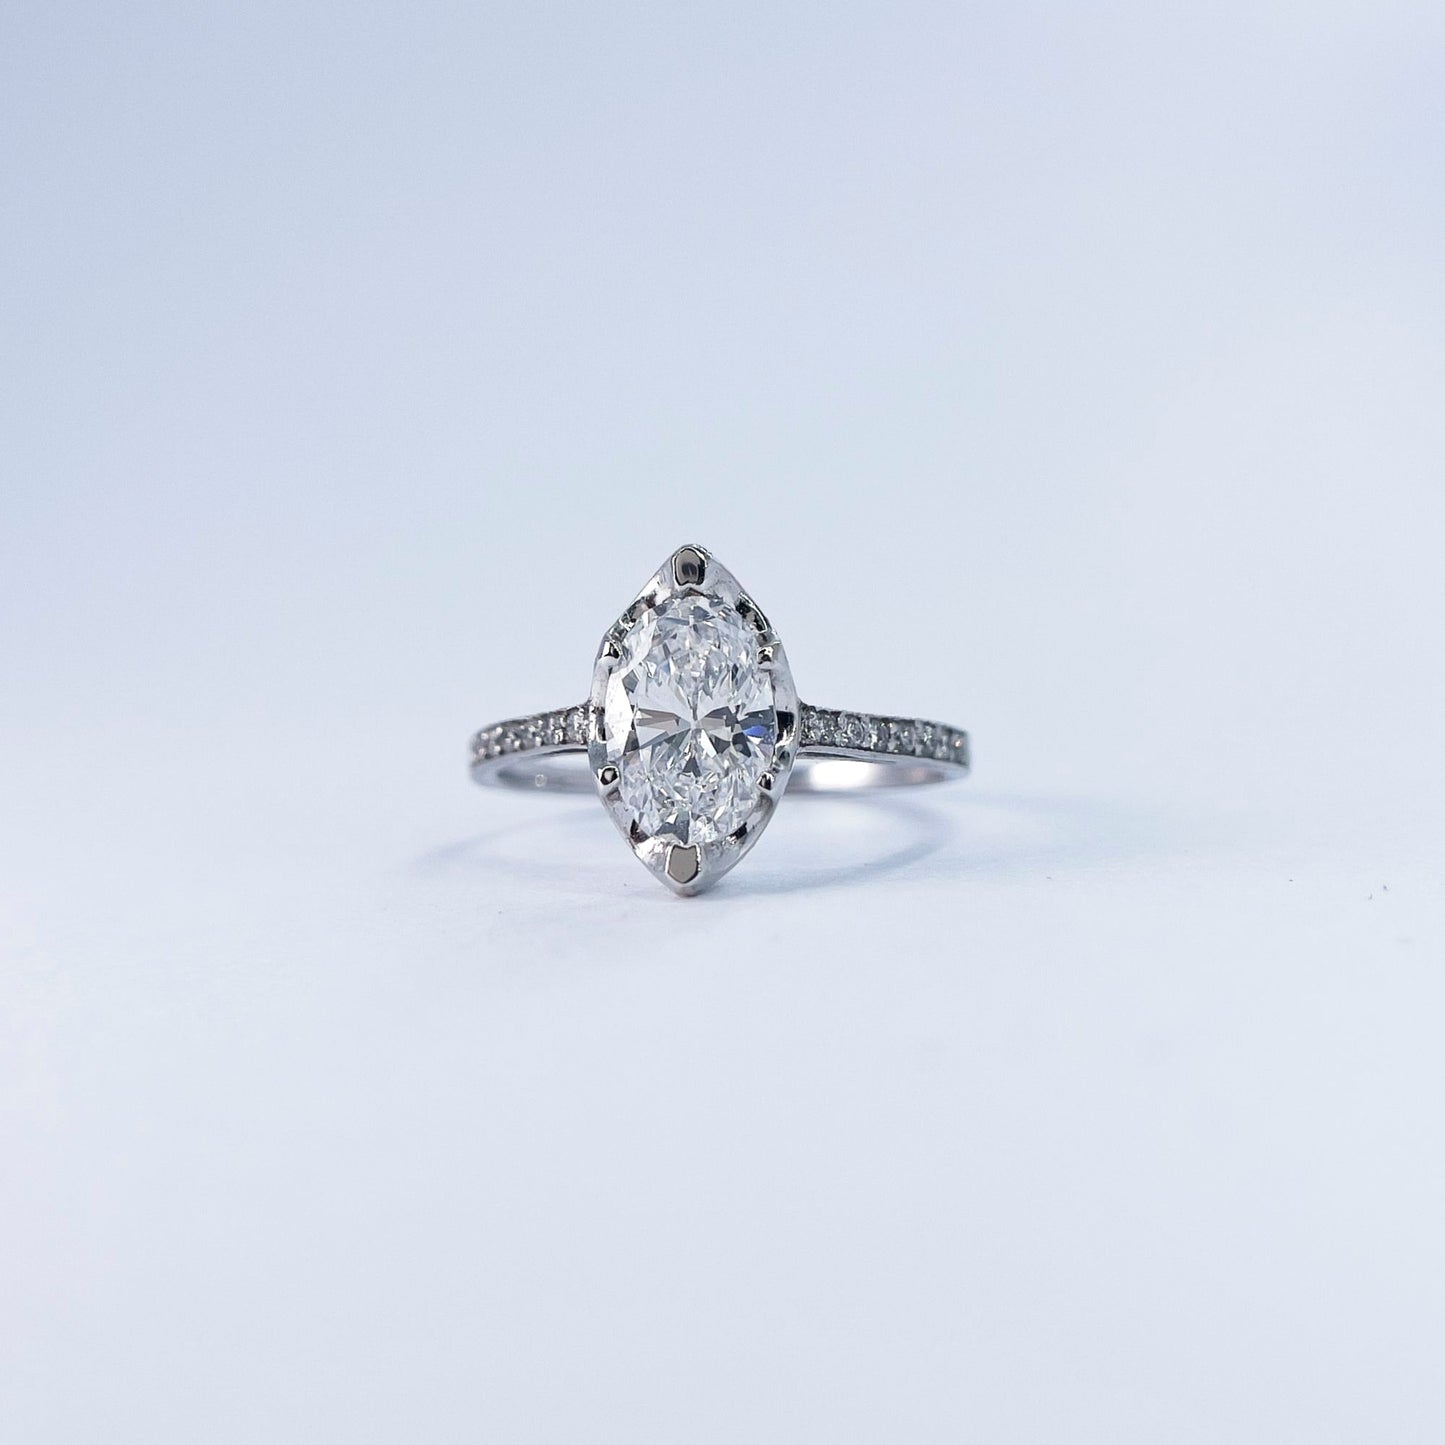 14K Elegant Oval Cut Diamond Engagement Ring with Pave Set Diamonds